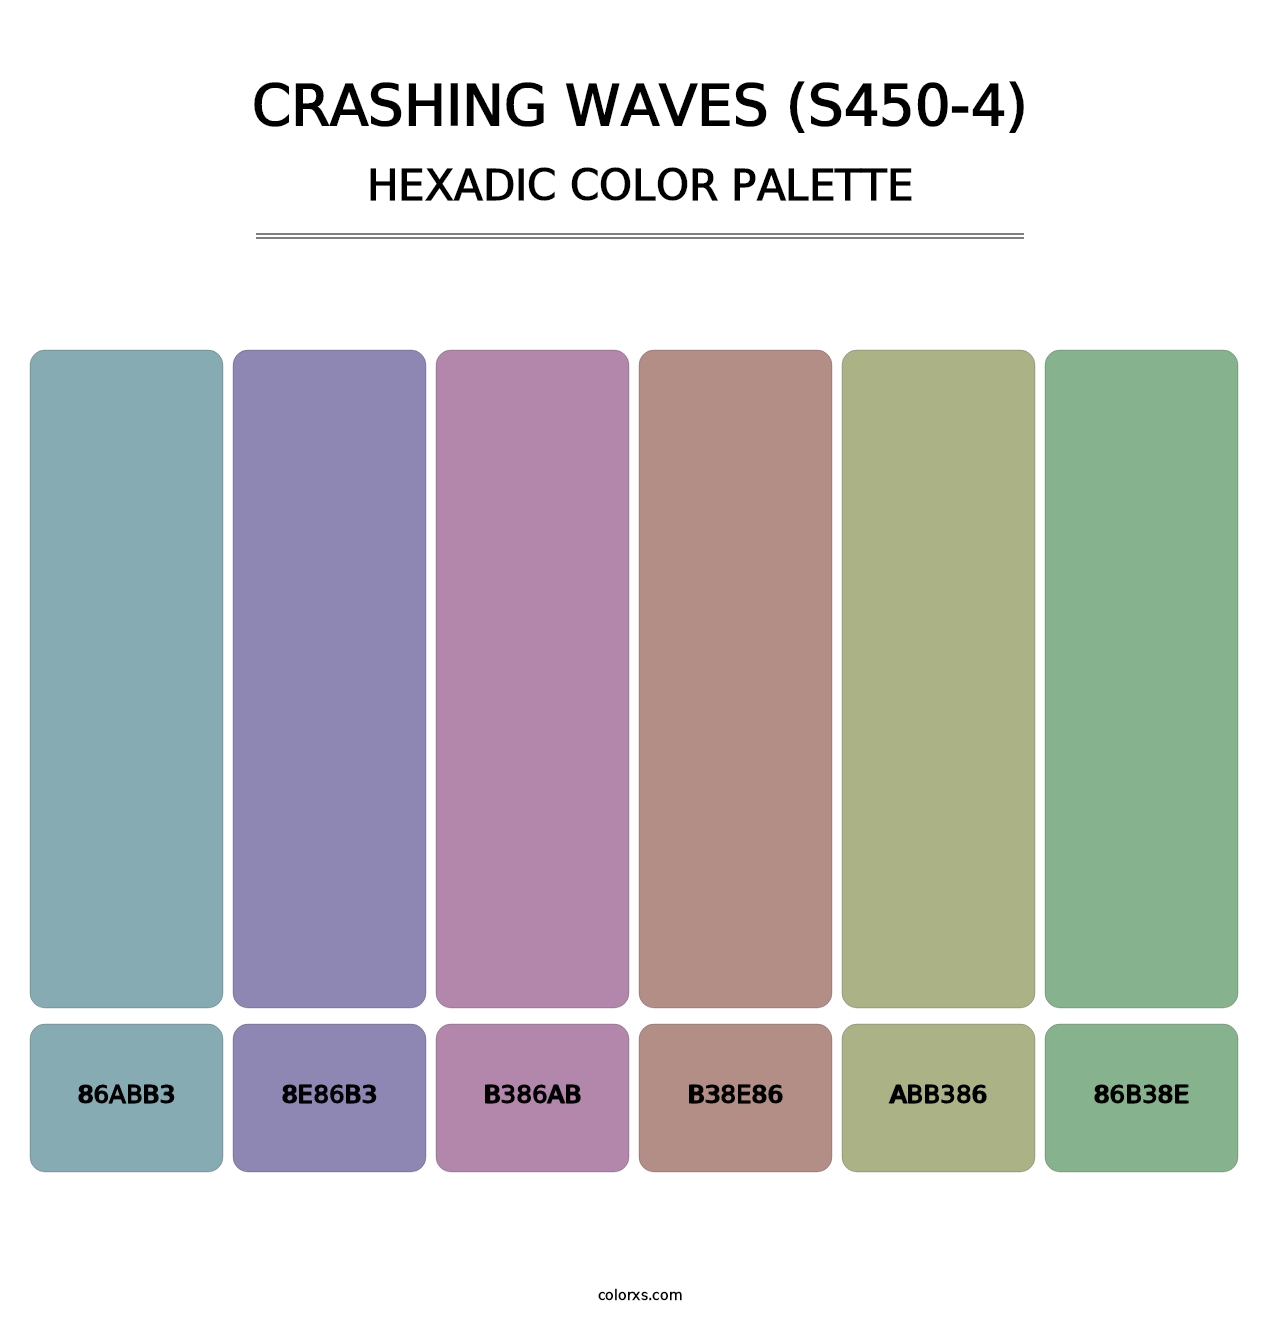 Crashing Waves (S450-4) - Hexadic Color Palette